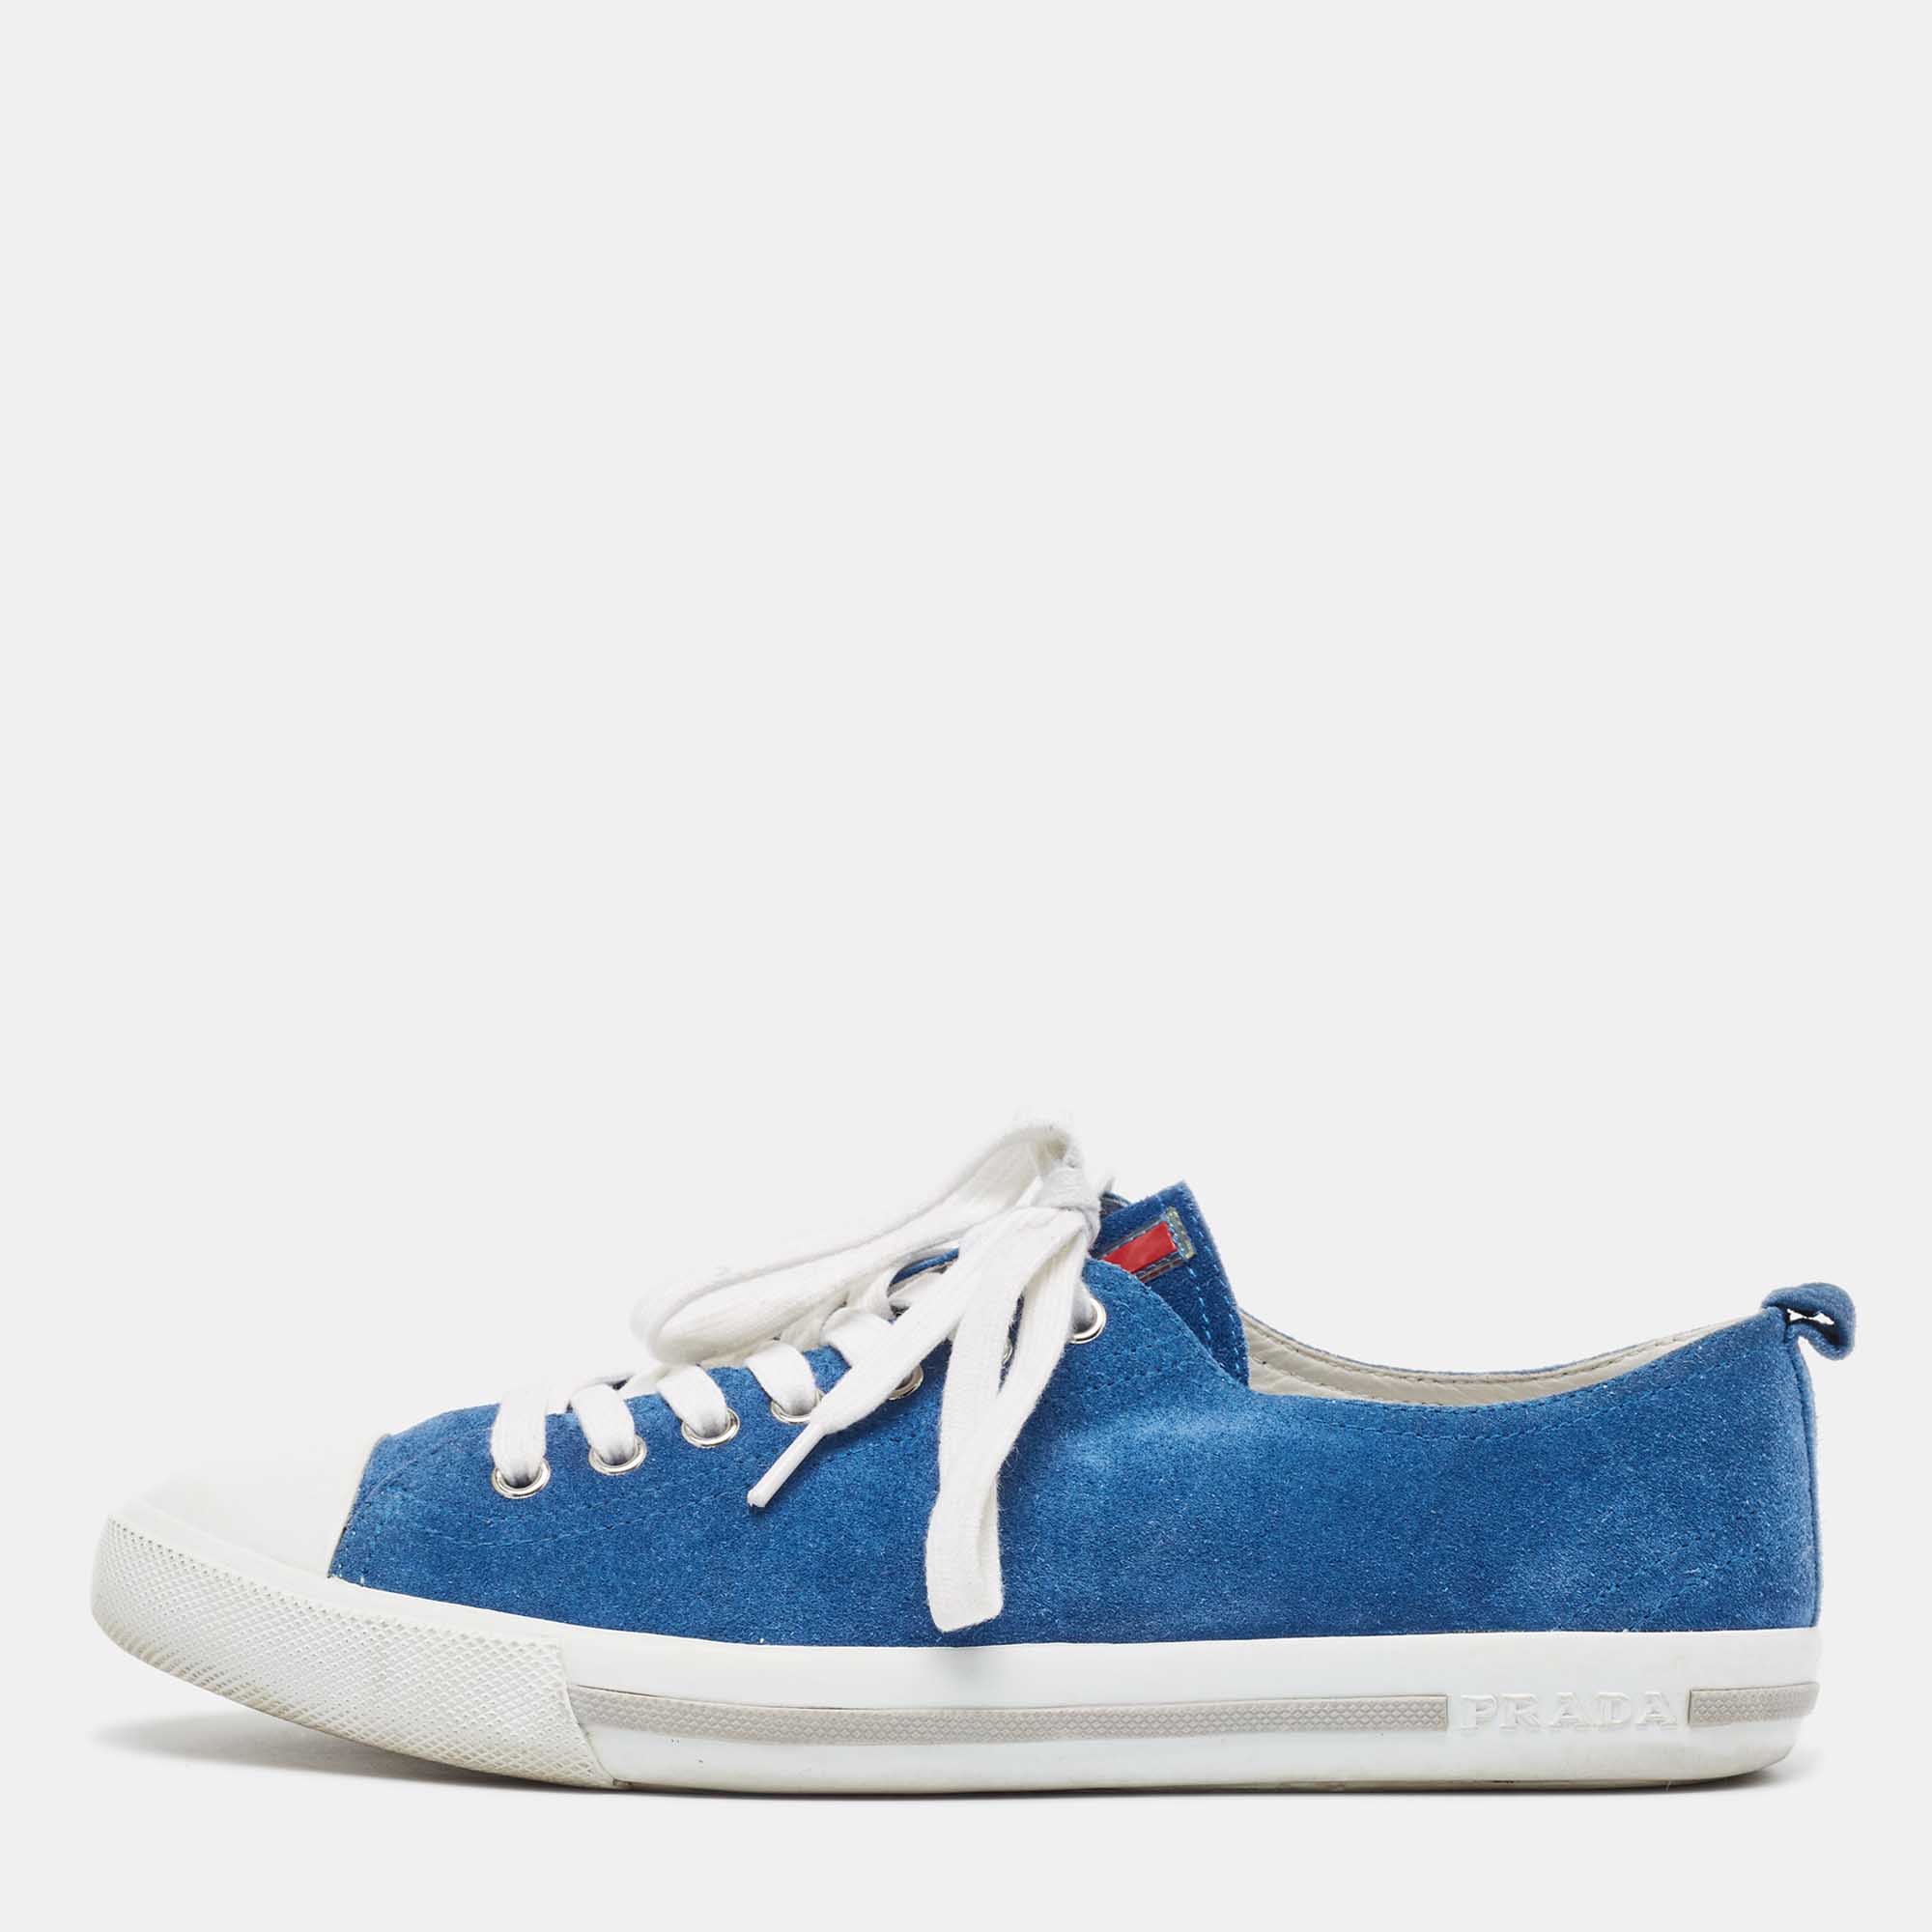 Prada sport blue suede low top sneakers size 39.5